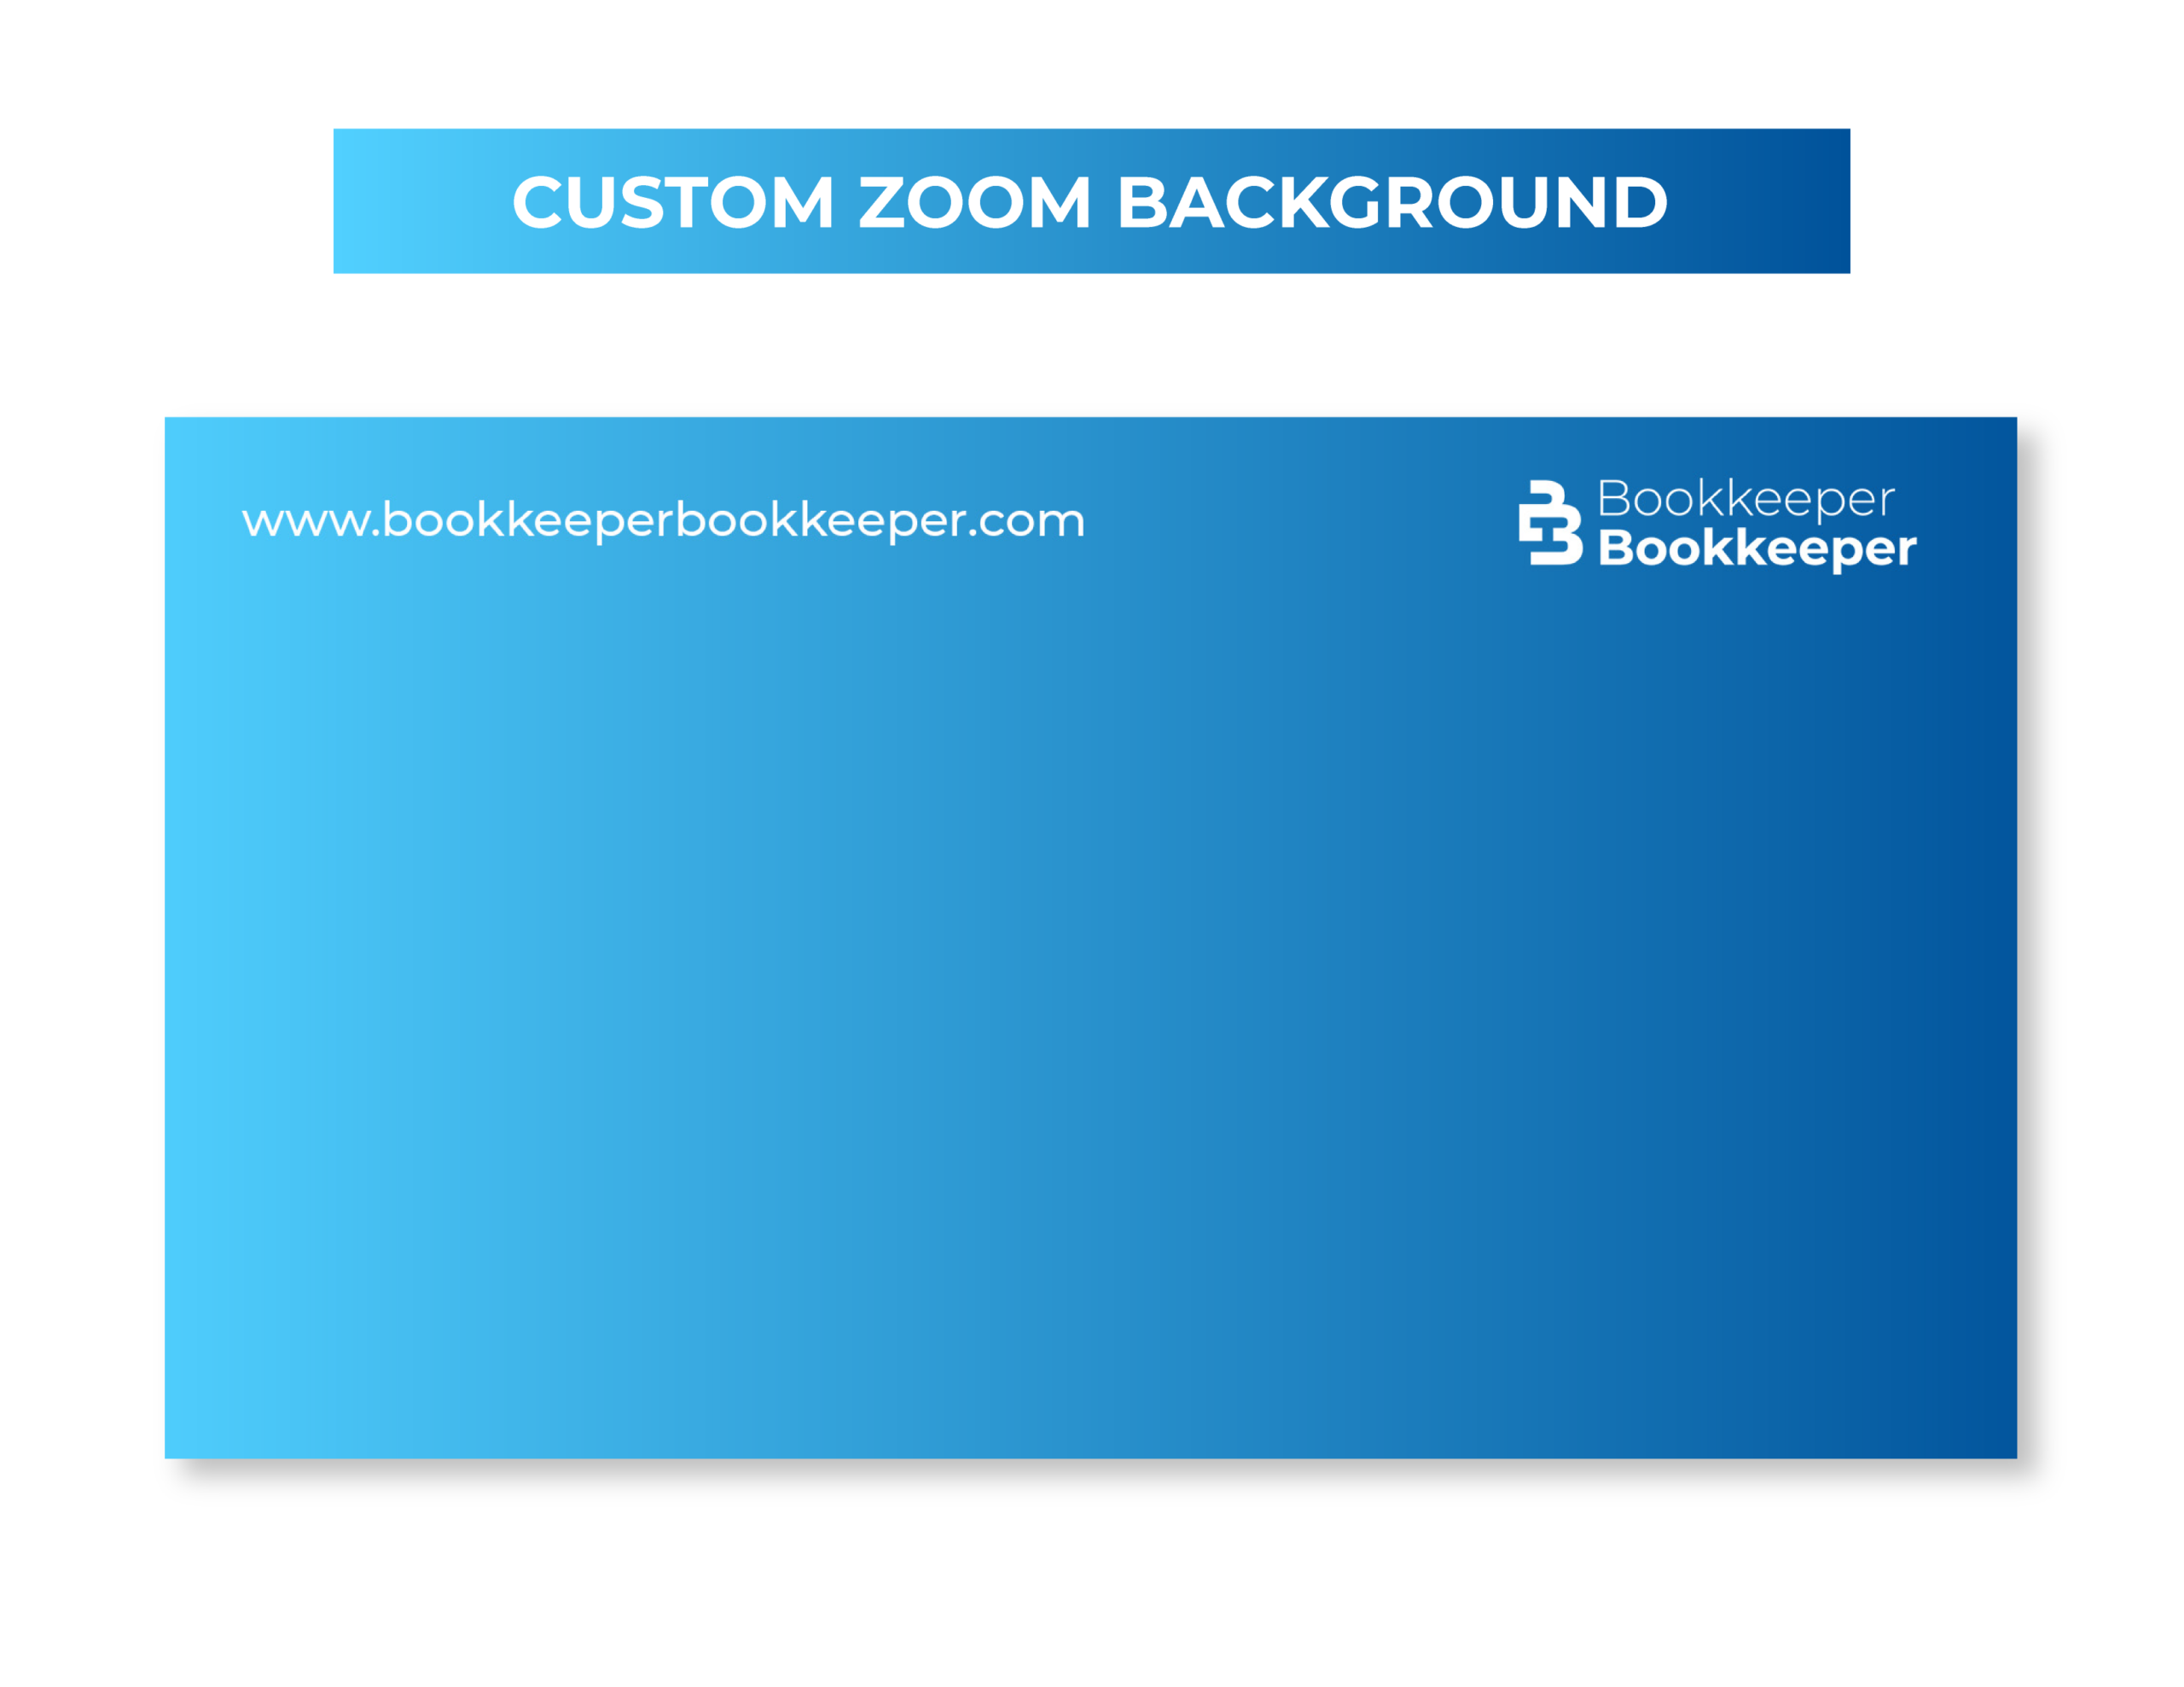 07BKBK_Custom Zoom Background